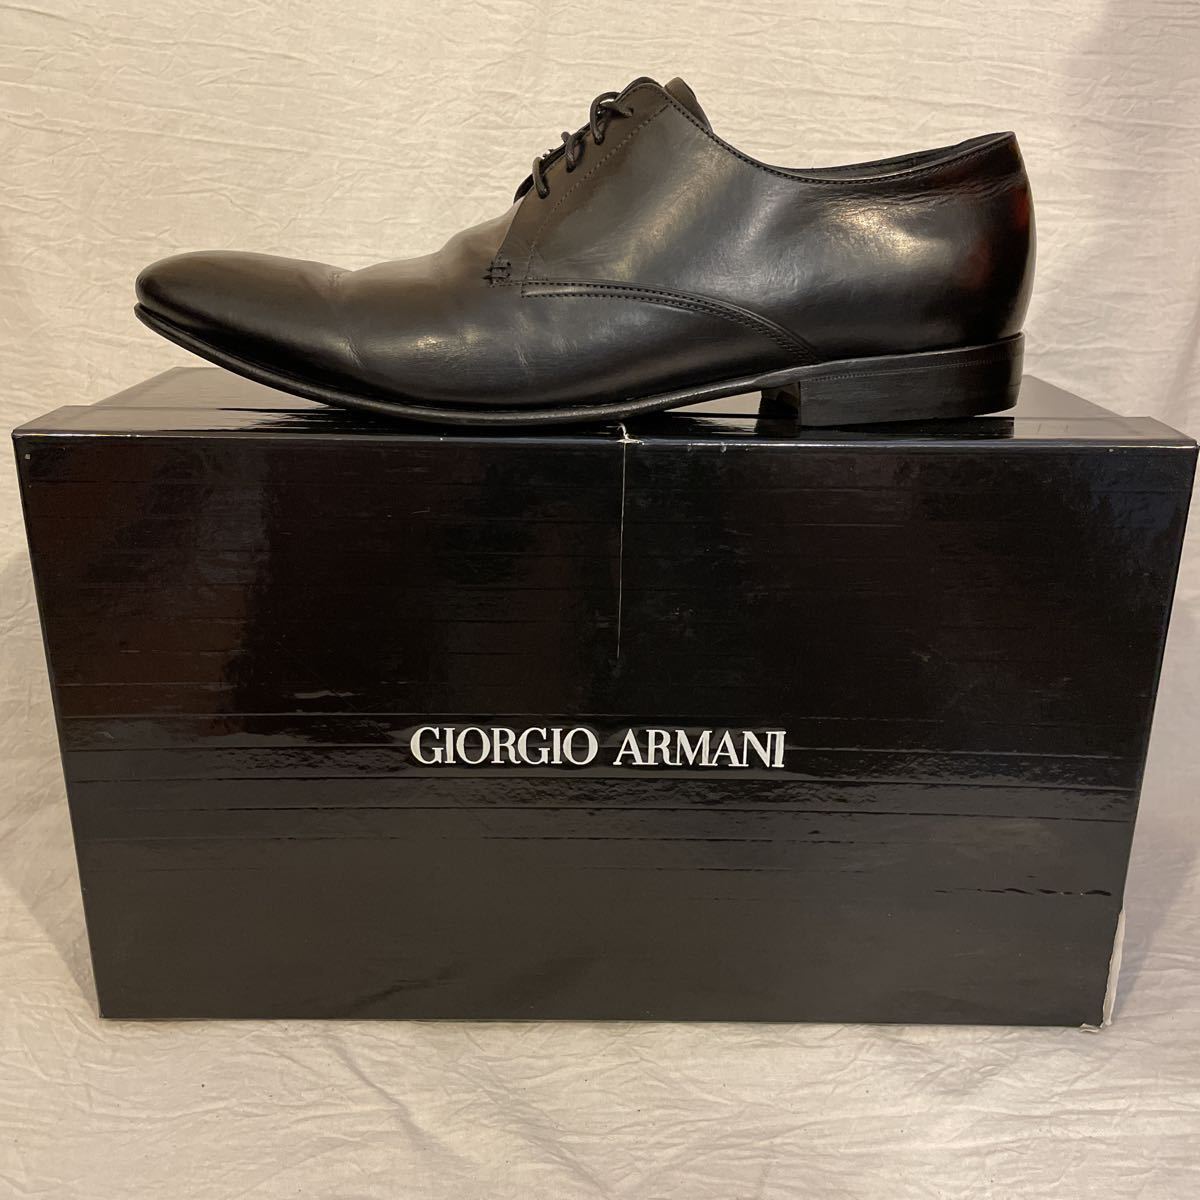 GIORGIO ARMANI ジョルジオ アルマーニ レザーシューズ 革靴 サイズ 6 1/2 (25.5cm位)